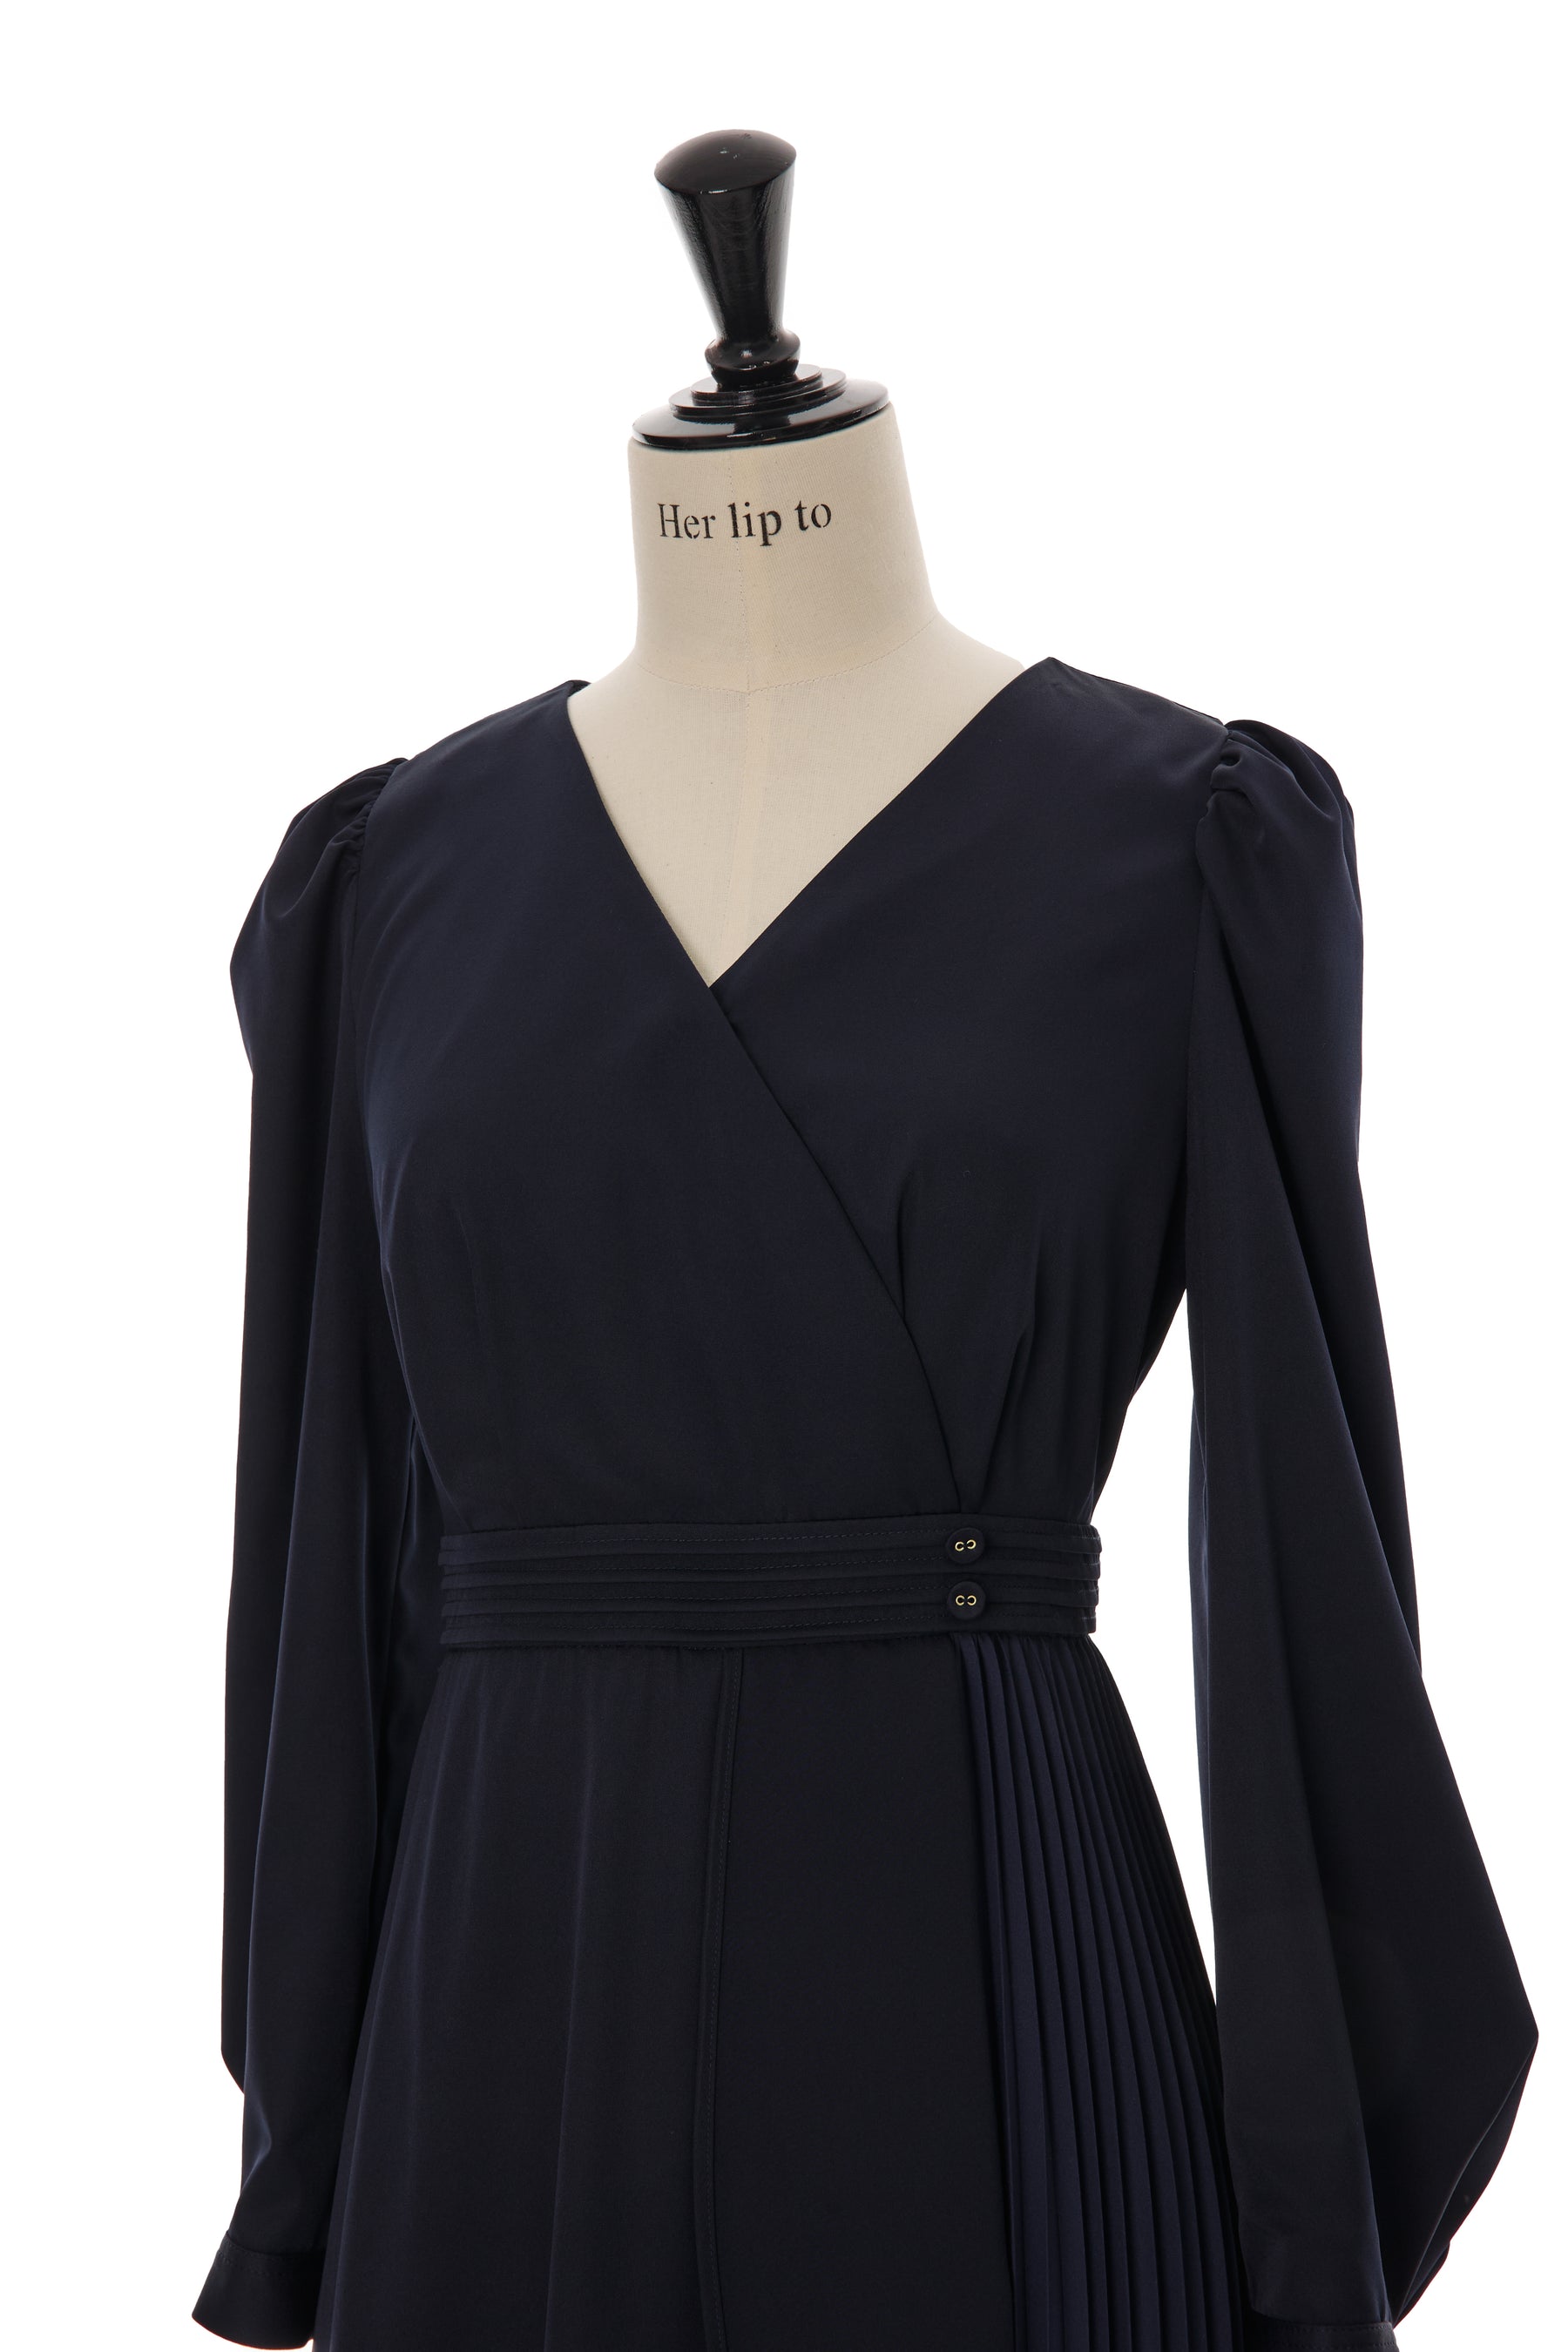 [New color] Mayfair Ruffled Dress